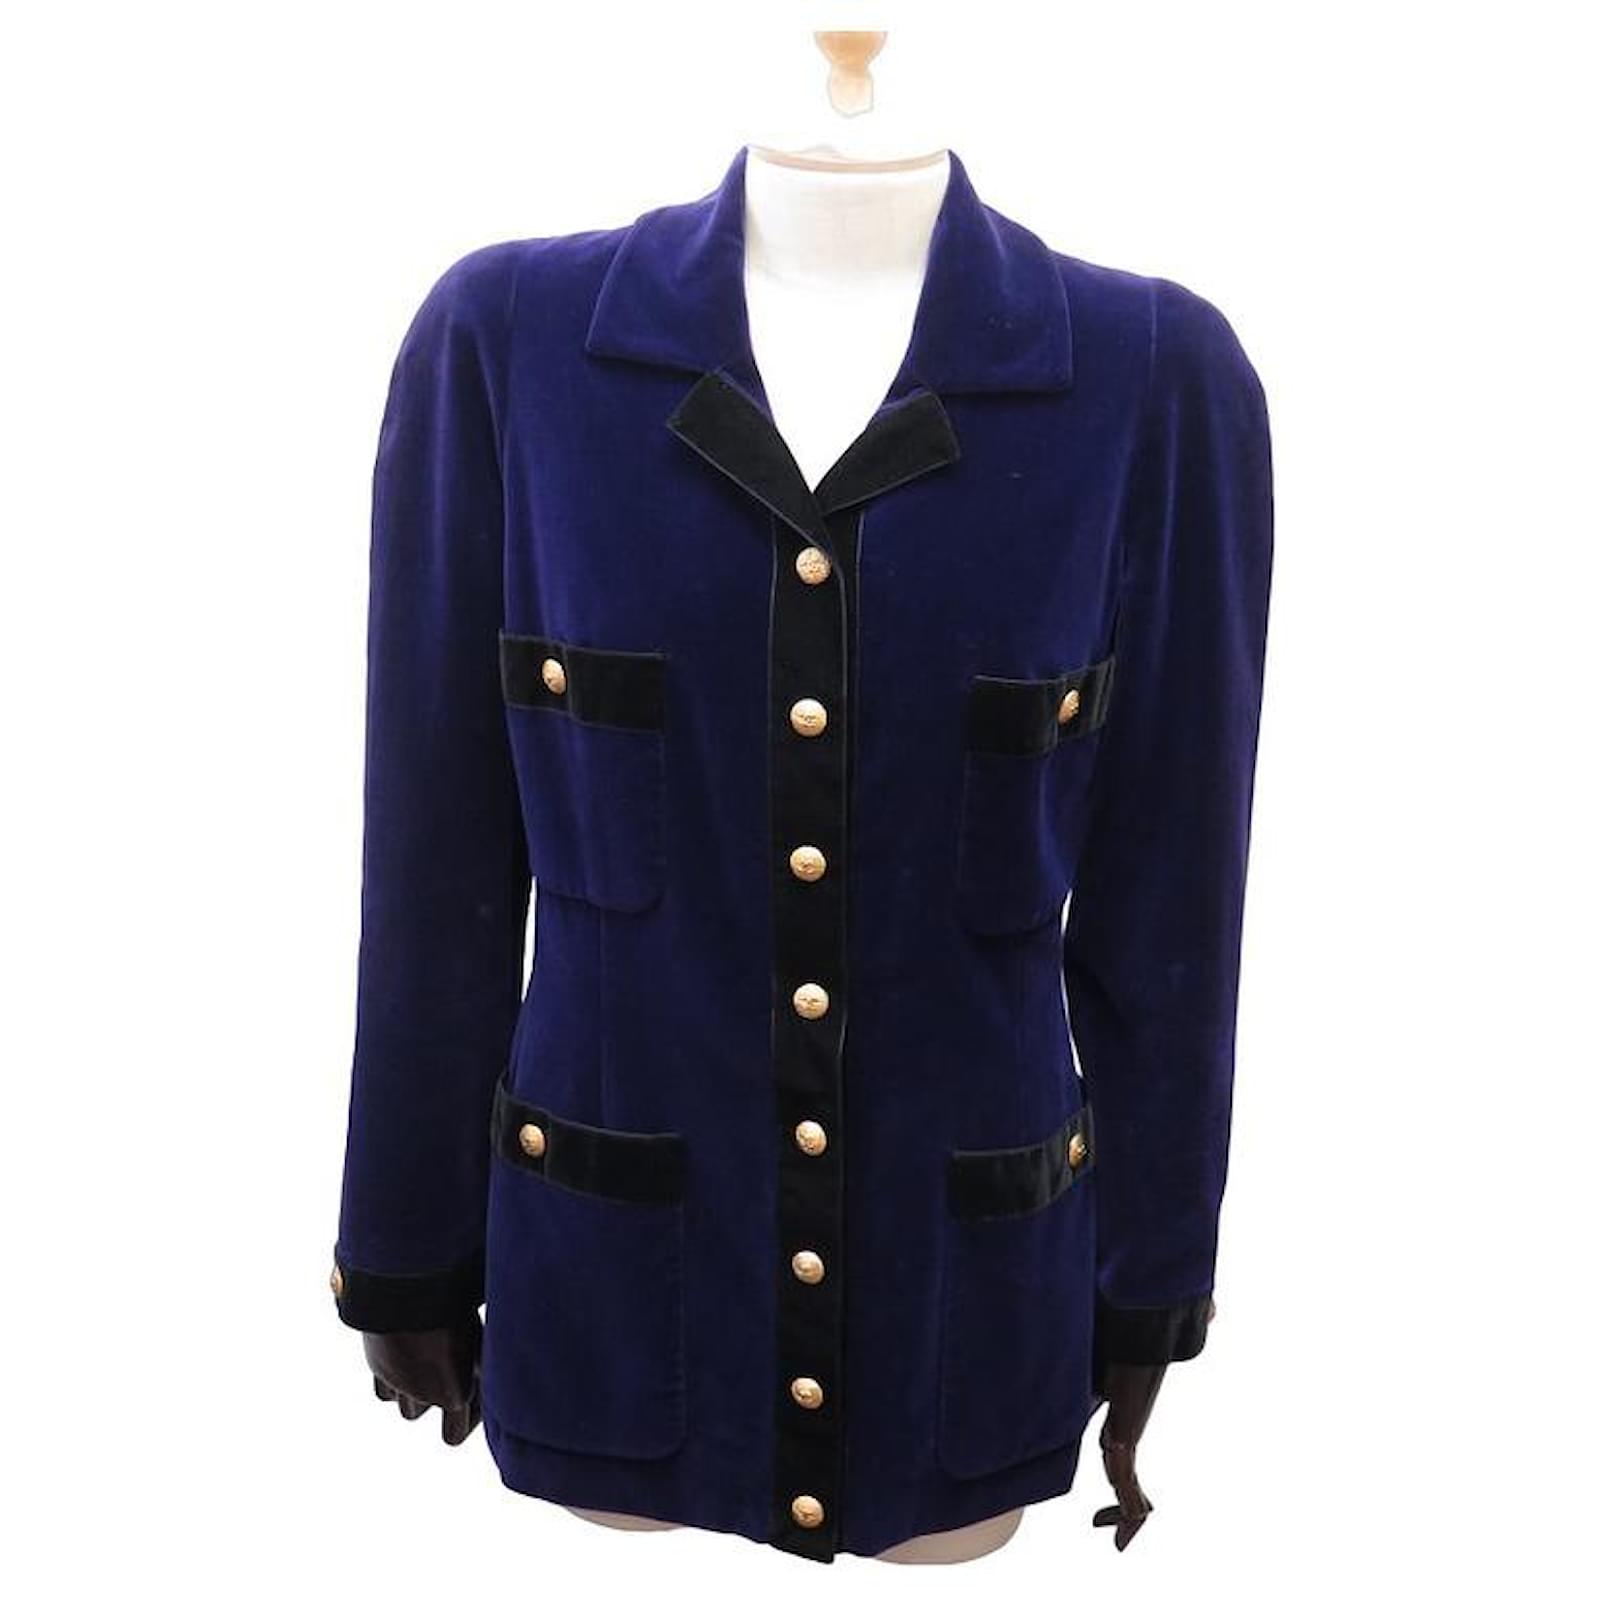 Jackets Chanel Vintage Chanel Tailor Jacket 21411/b30 M 40 Blue Velvet Velvet Jacket